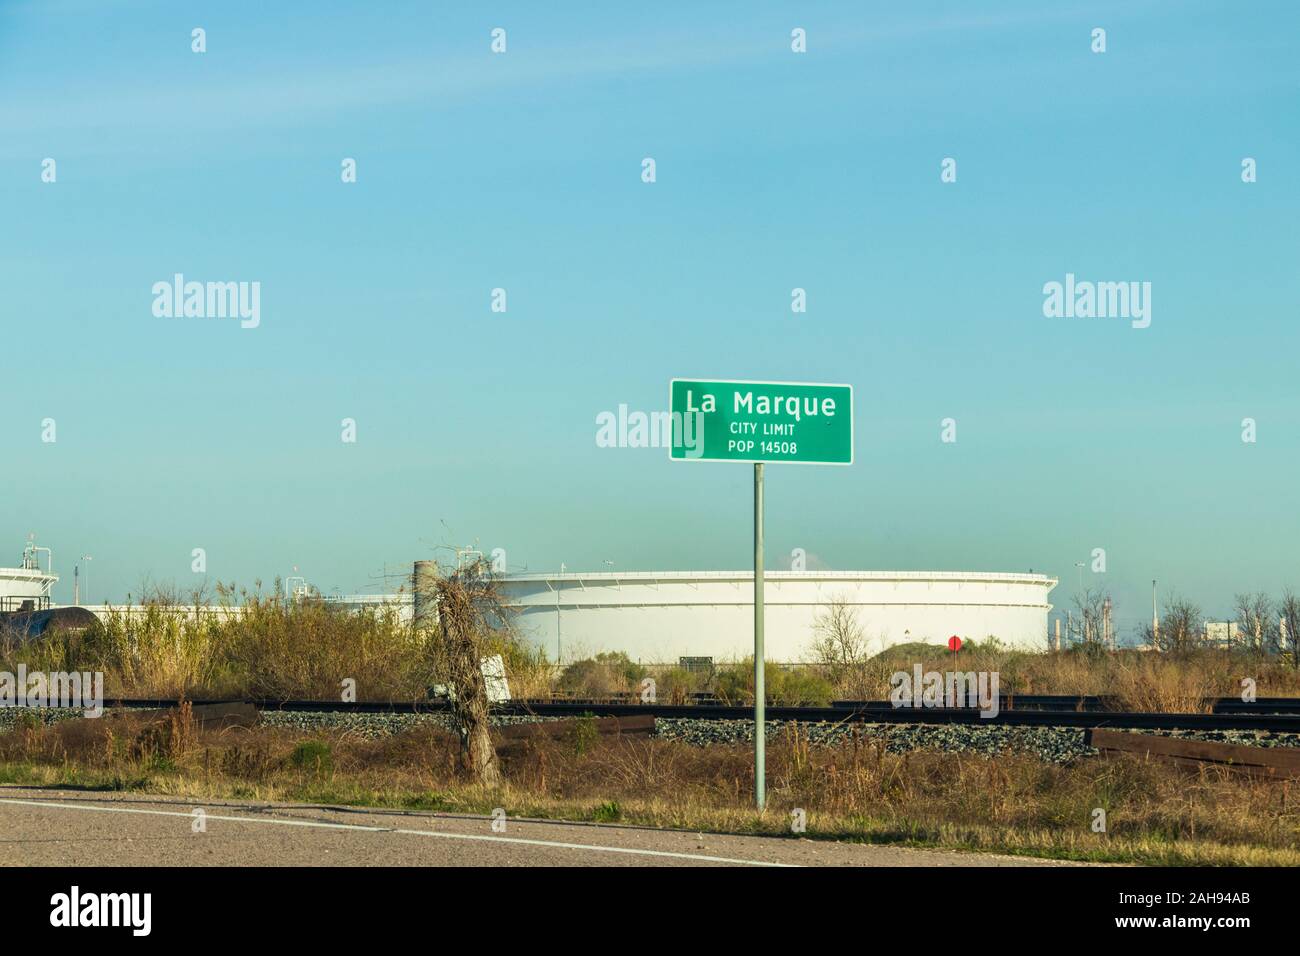 Town of La Marque on Texas state highway 146, coastal route along Texas coast. Stock Photo